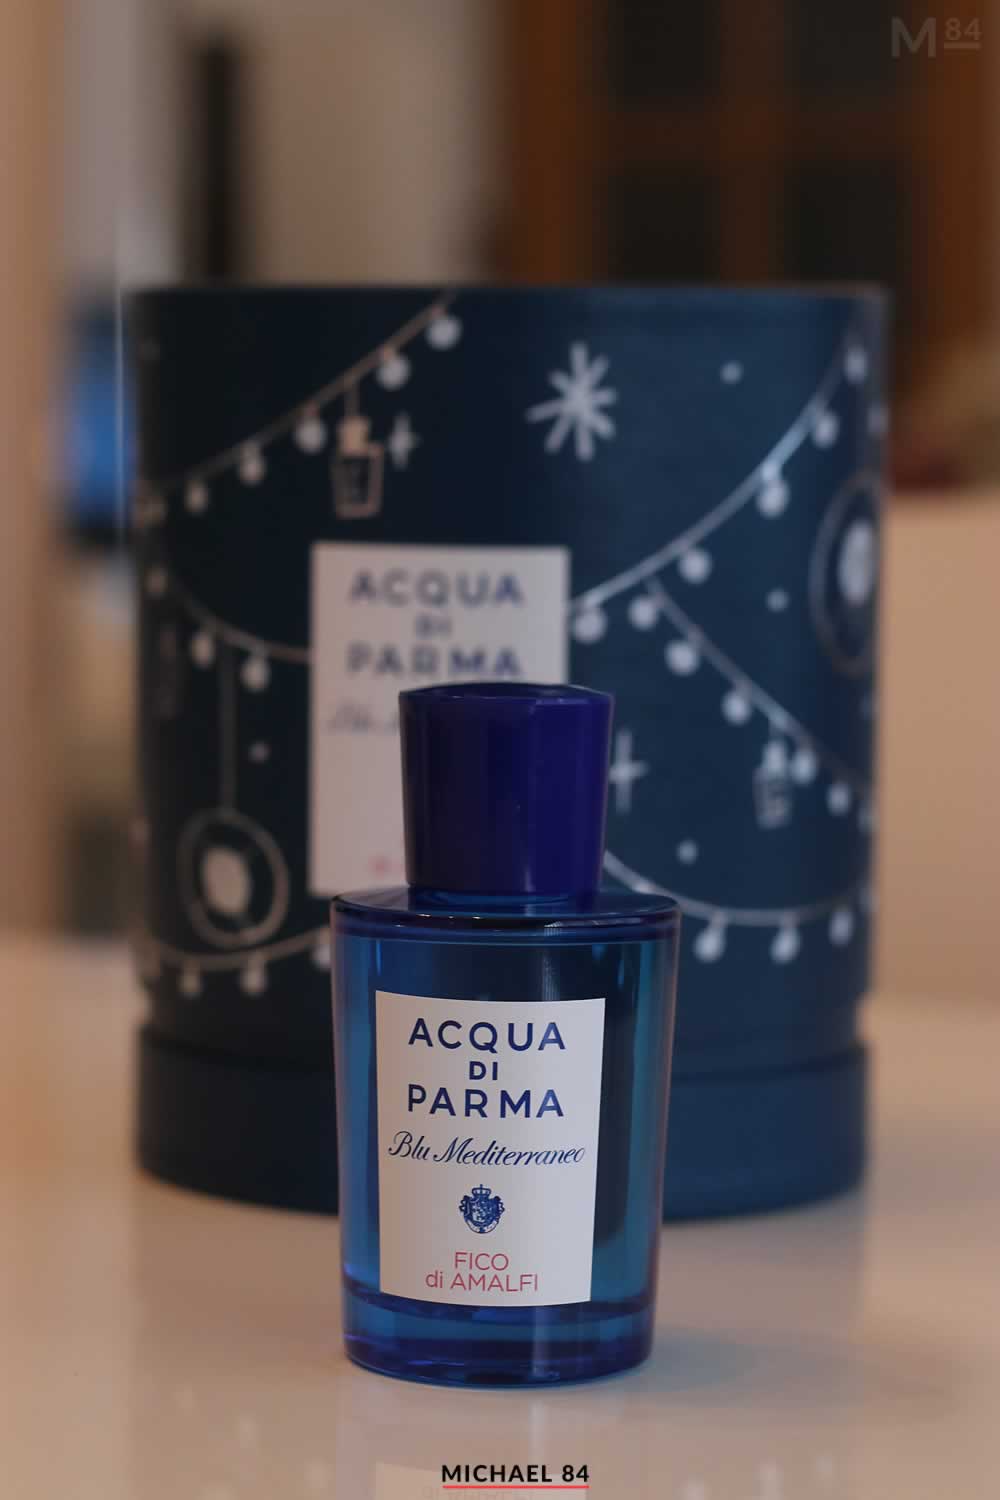 Acqua Di Parma Blu Mediterraneo Fico Di Amalfi Fragrance Review - Here's  What It Smells Like